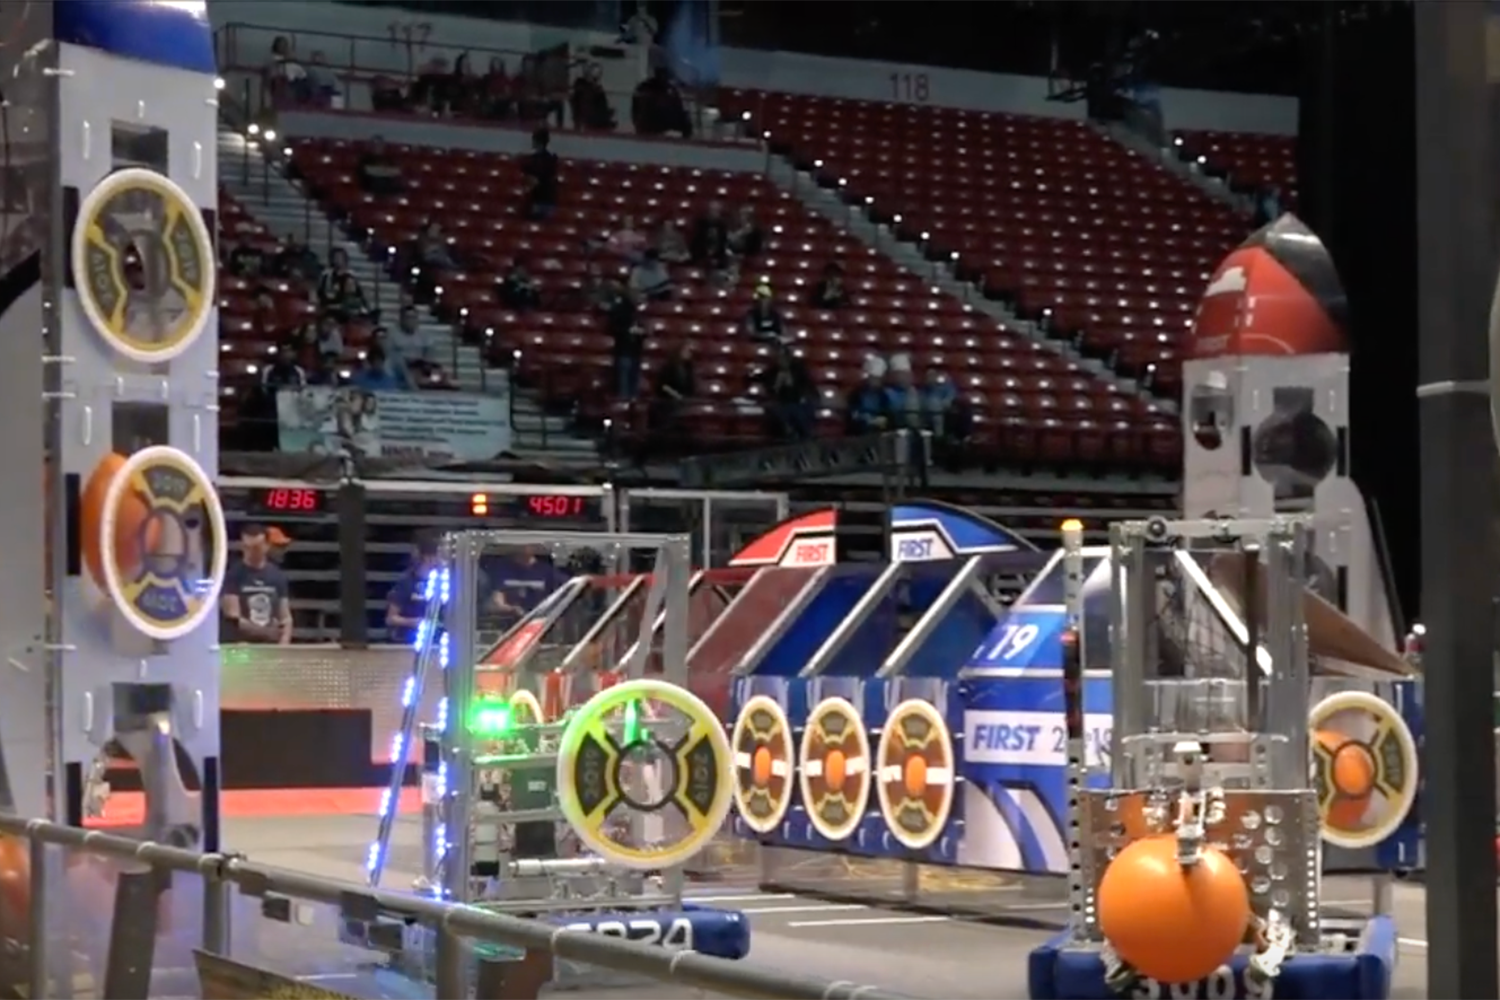 VIDEO: Robotics team competes in multi-day event